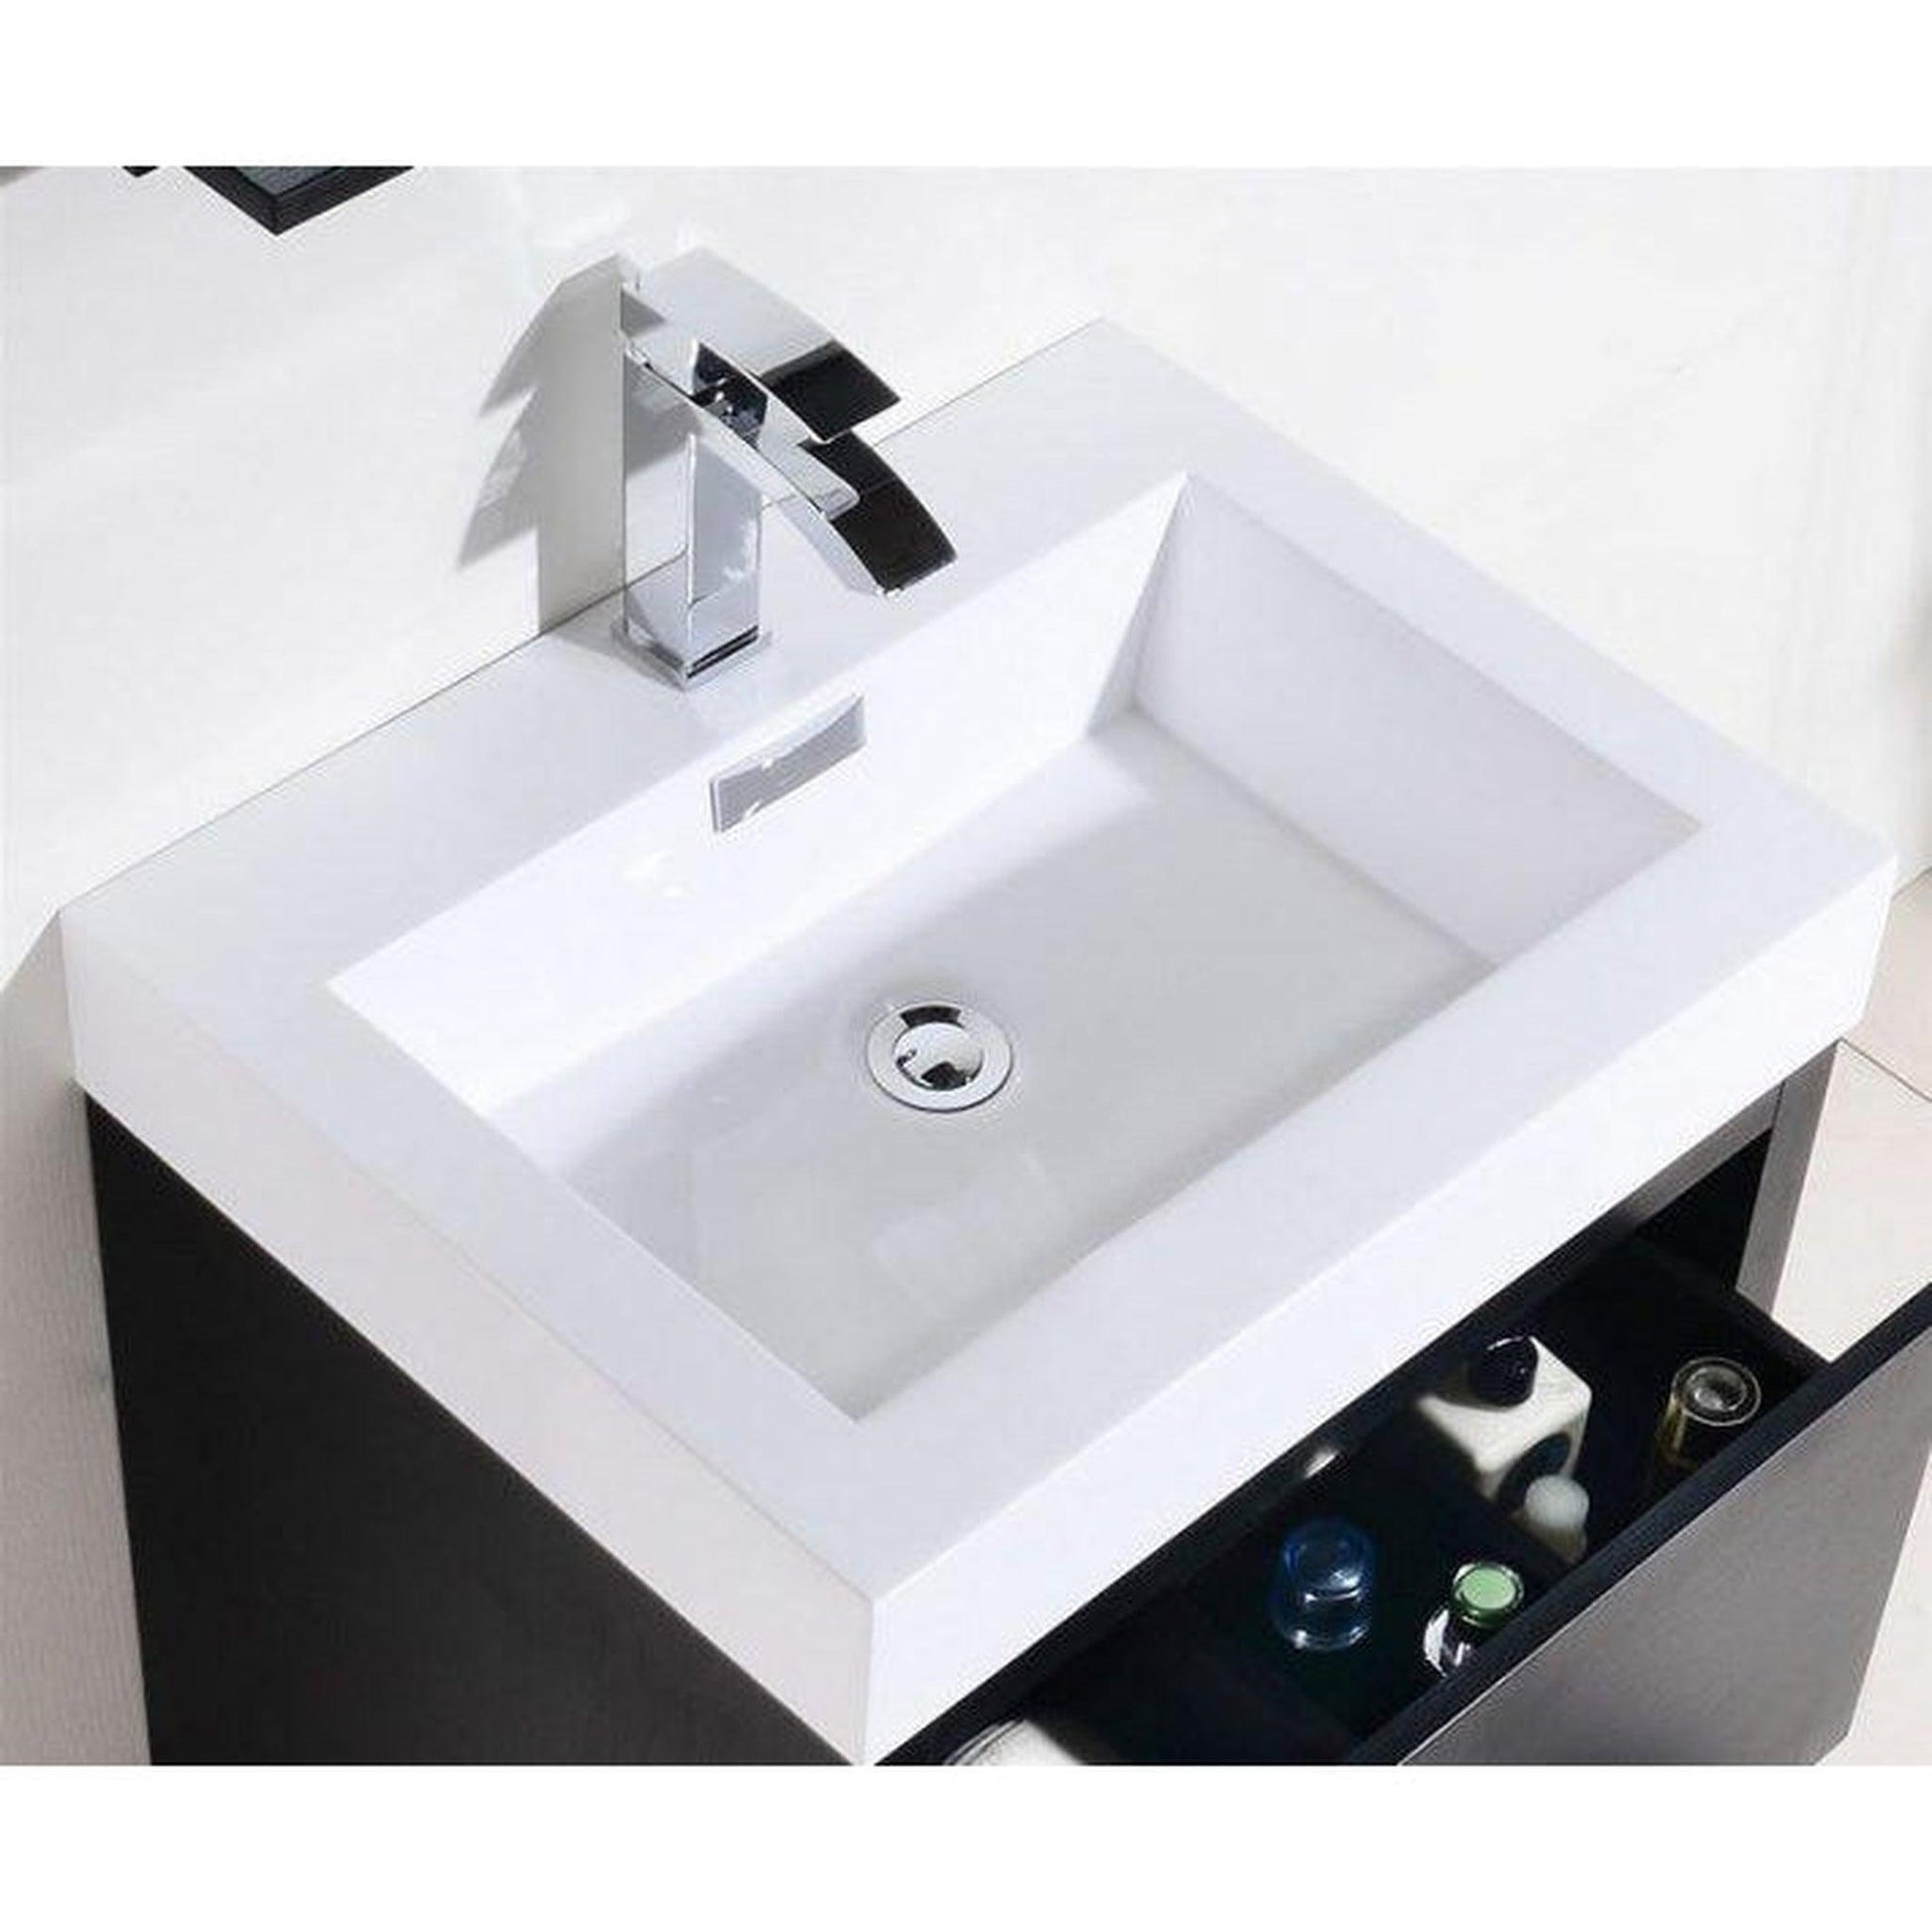 KubeBath Bliss 24" Black Freestanding Modern Bathroom Vanity With Single Integrated Acrylic Sink With Overflow